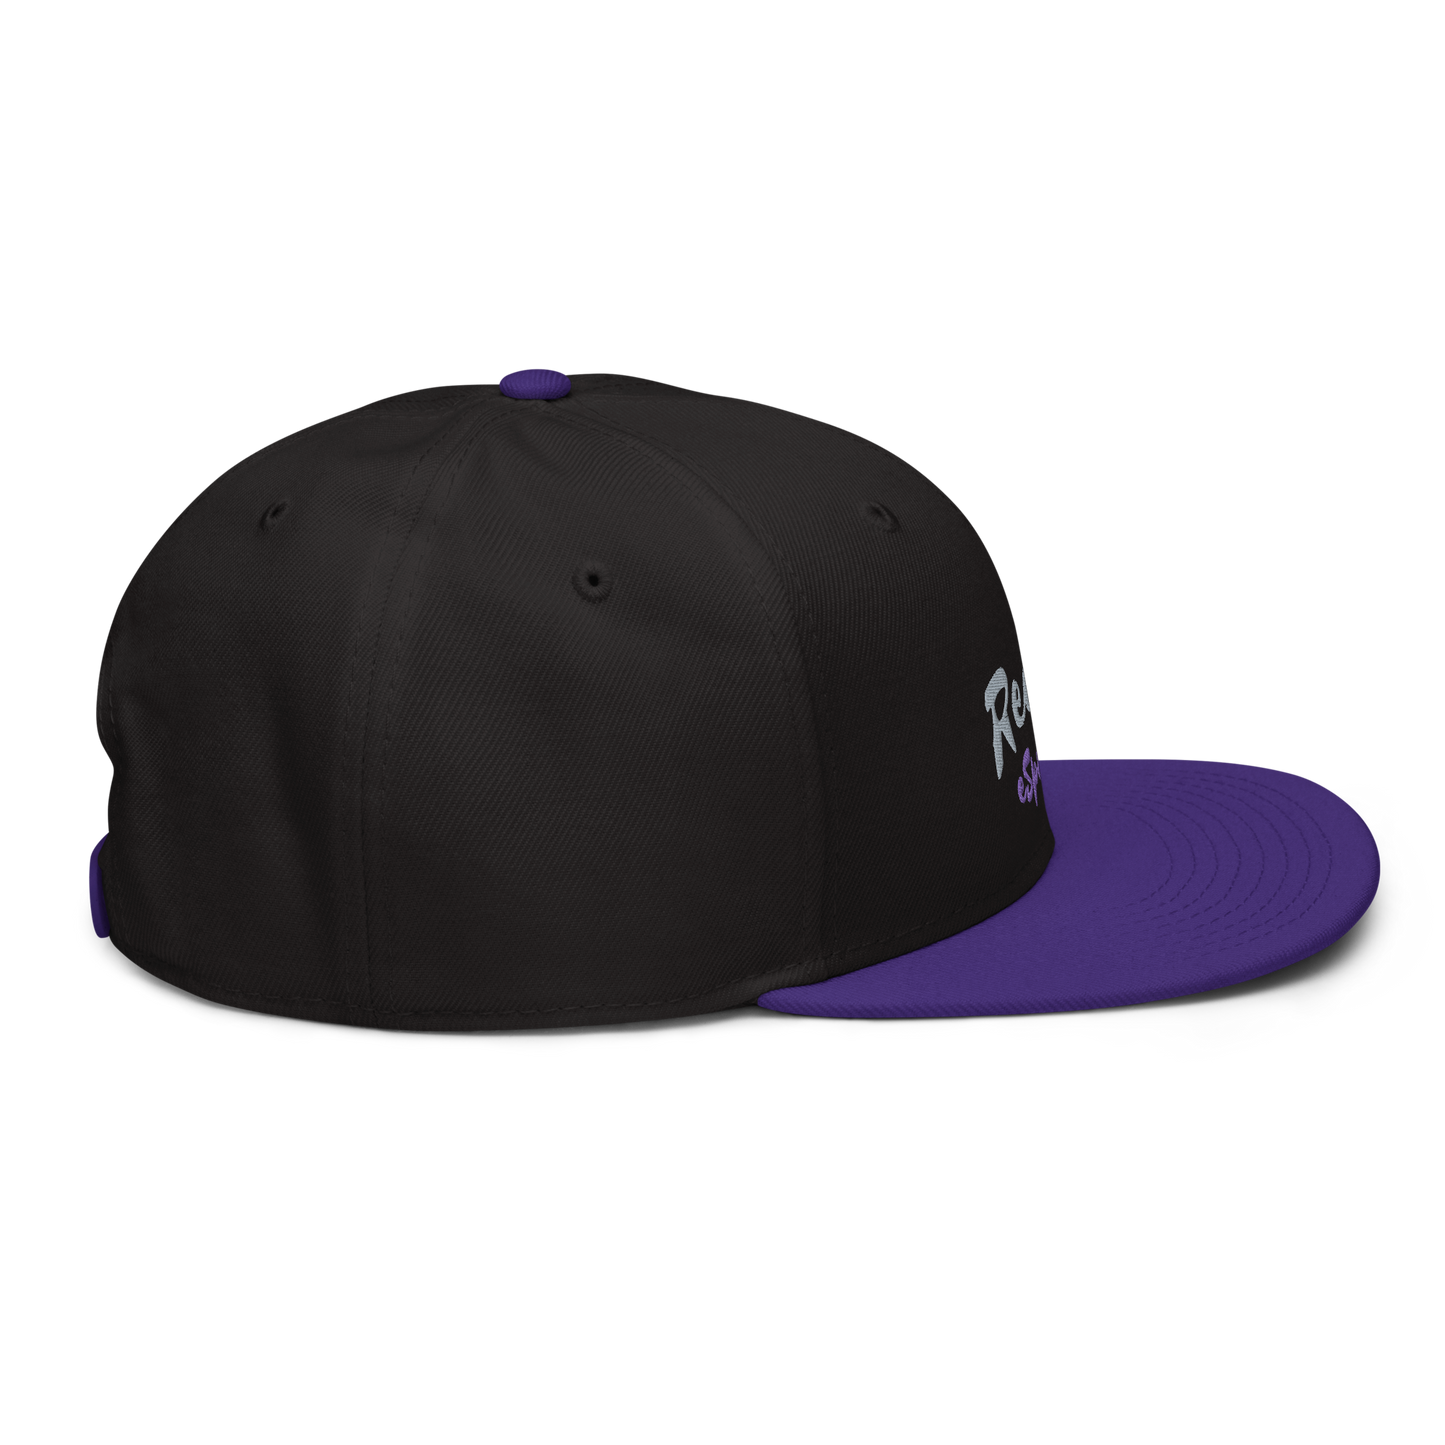 REDZ ESPORTS - Snapback Cap Purple